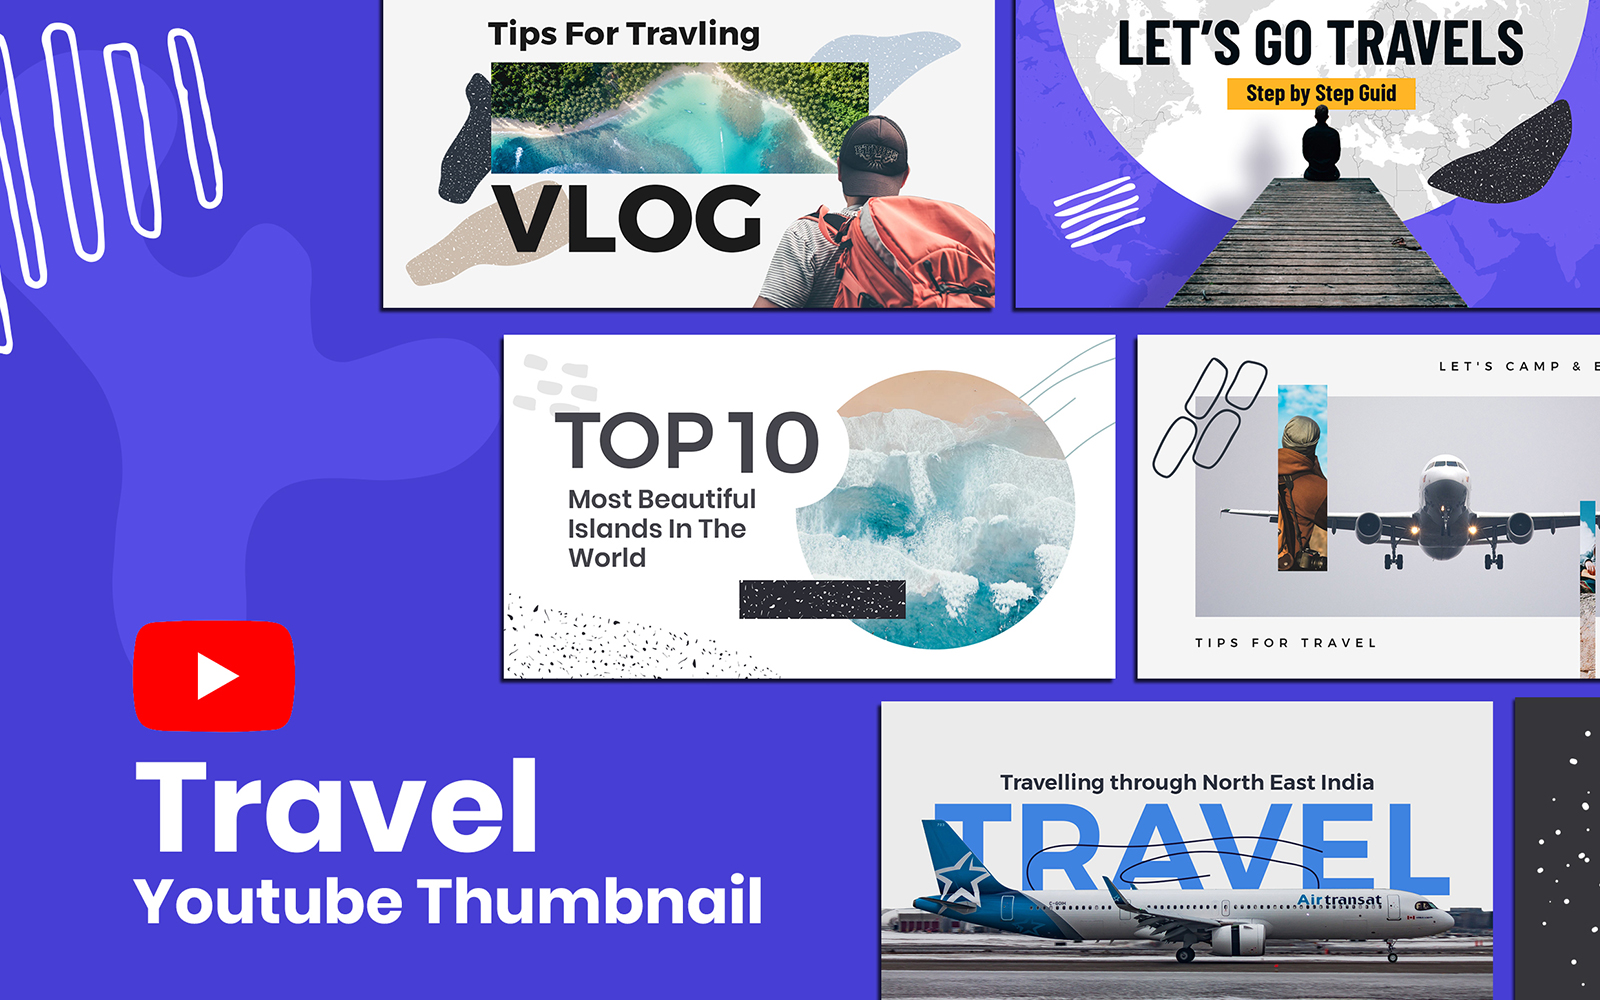 Travel Youtube Thumbnail Cover